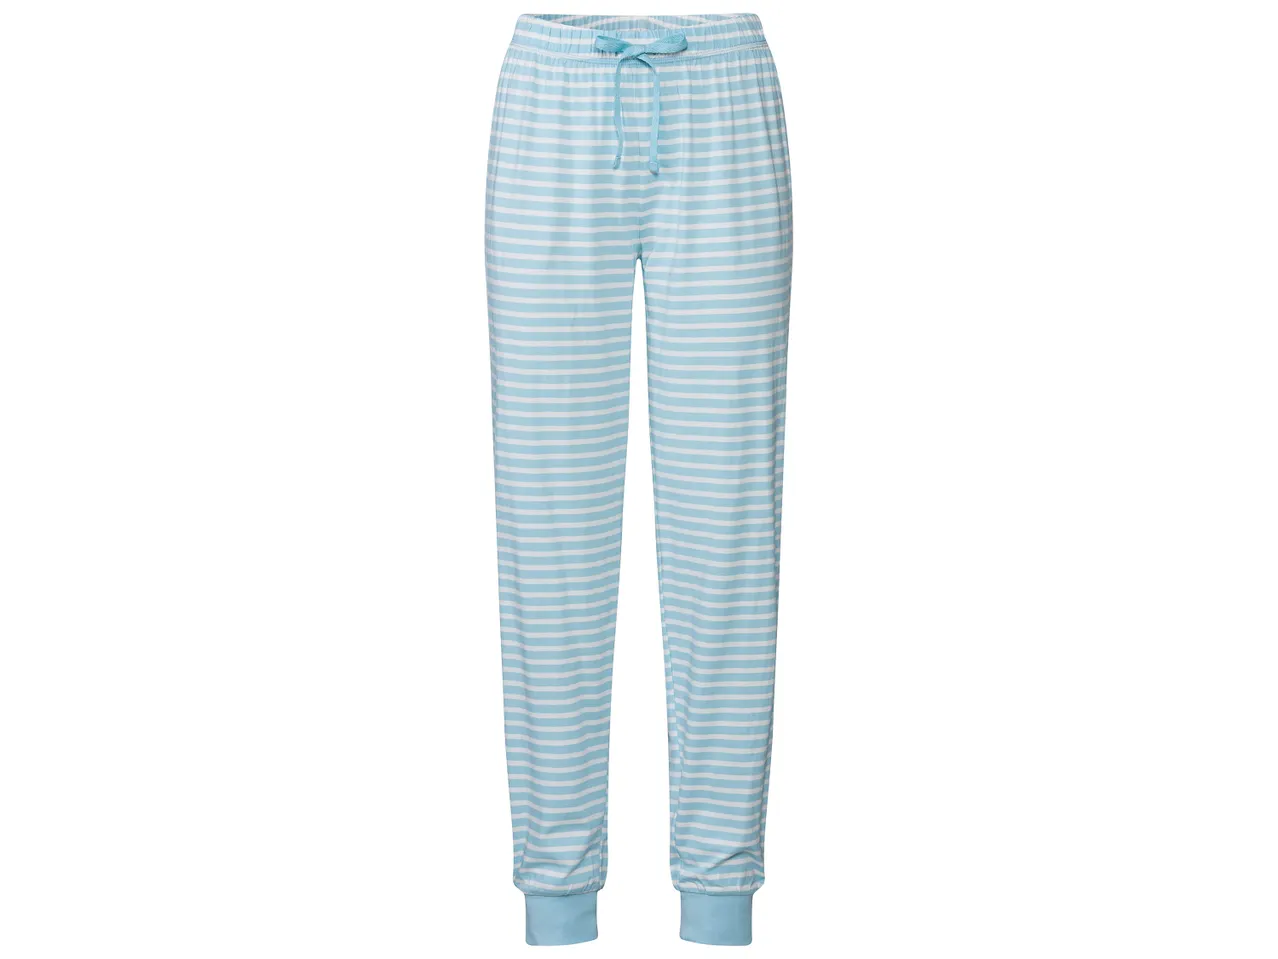 Pyjama , prezzo 11.89 EUR 
Pyjama 
- Du S au XL selon modèle.
- Ex. 100 % coton
- ...